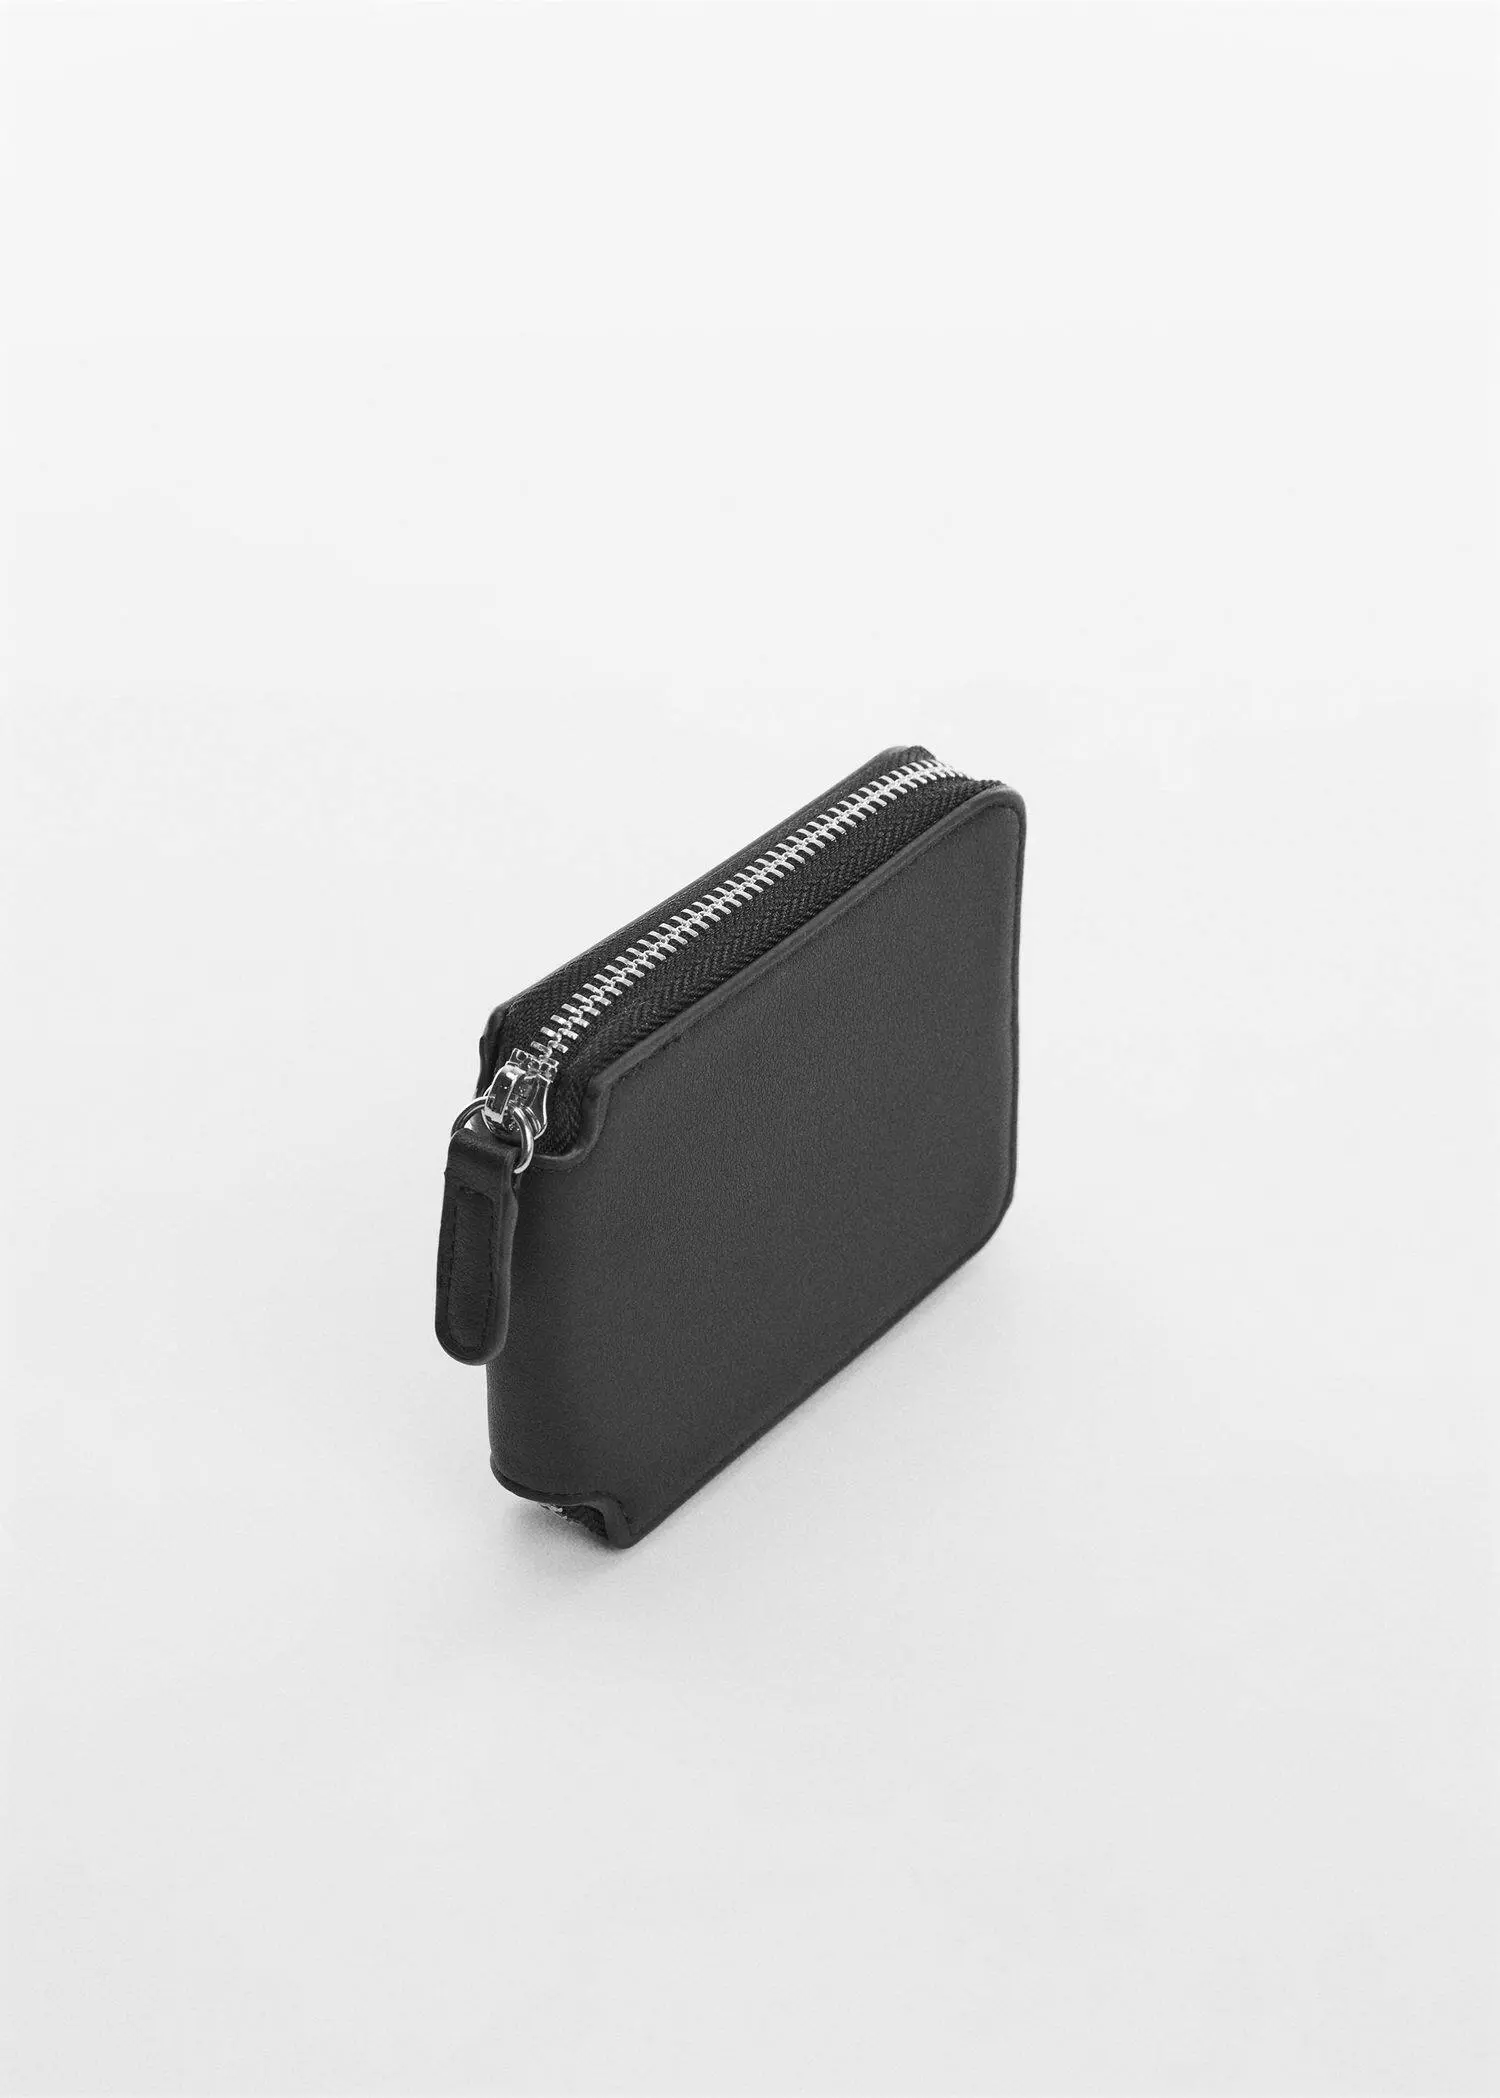 Mango Anti-contactless card holder wallet. 1